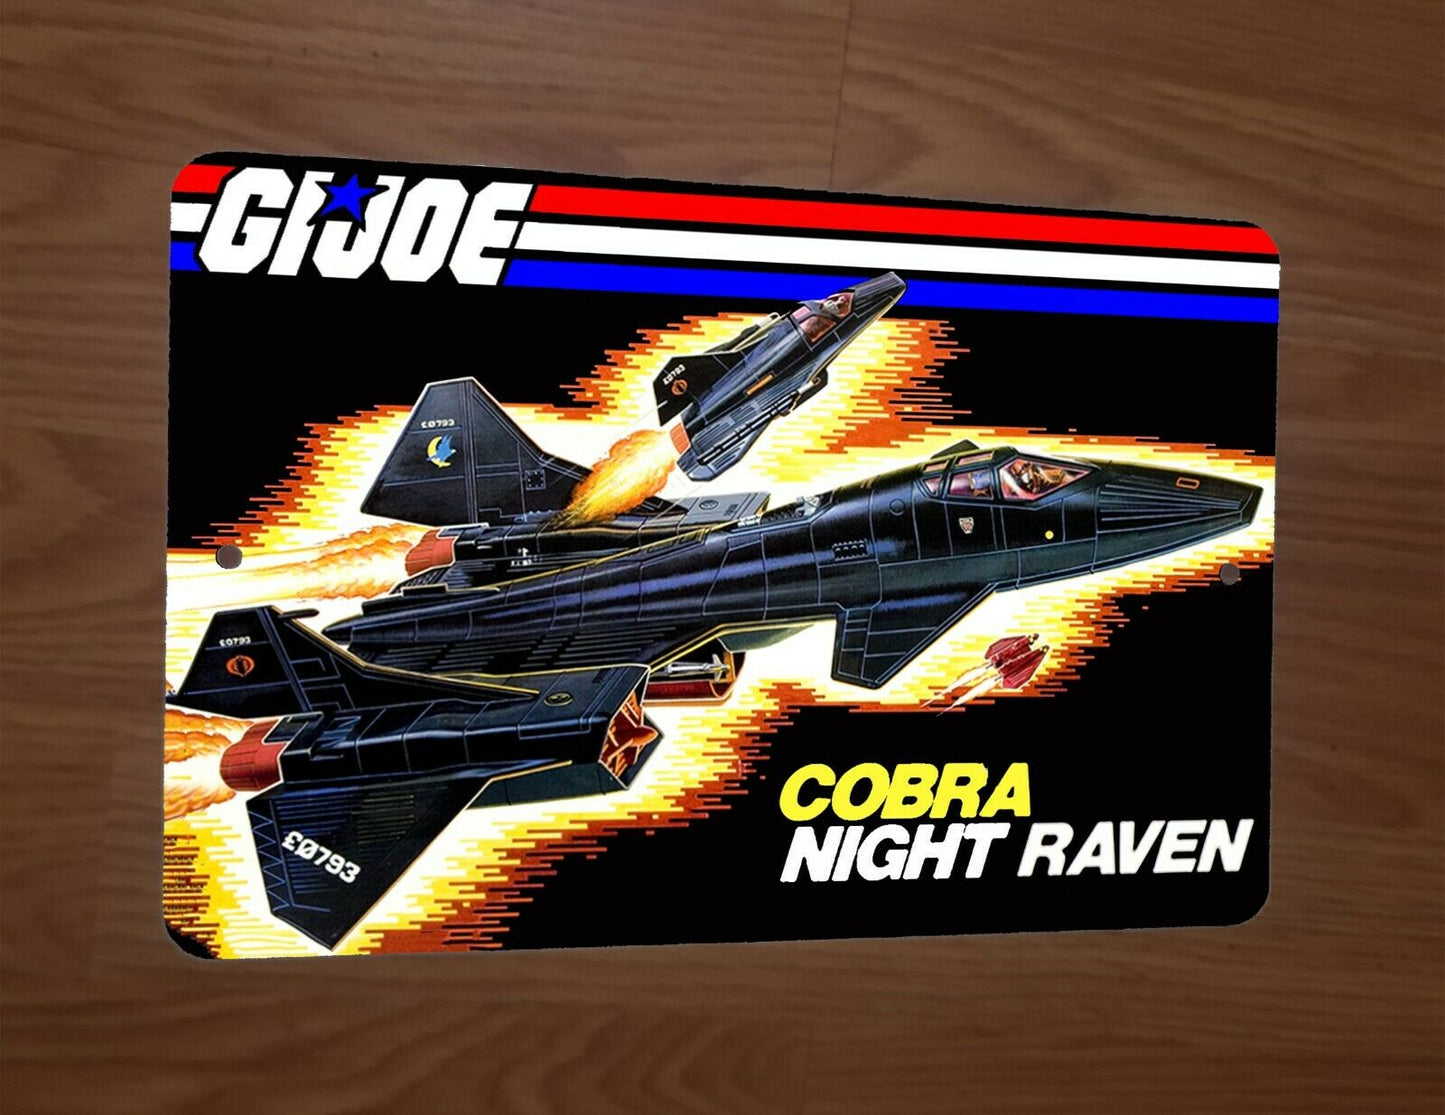 Cobra Night Raven Stealth Fighter Jet GI Joe Artwork 8x12 Metal Wall Sign